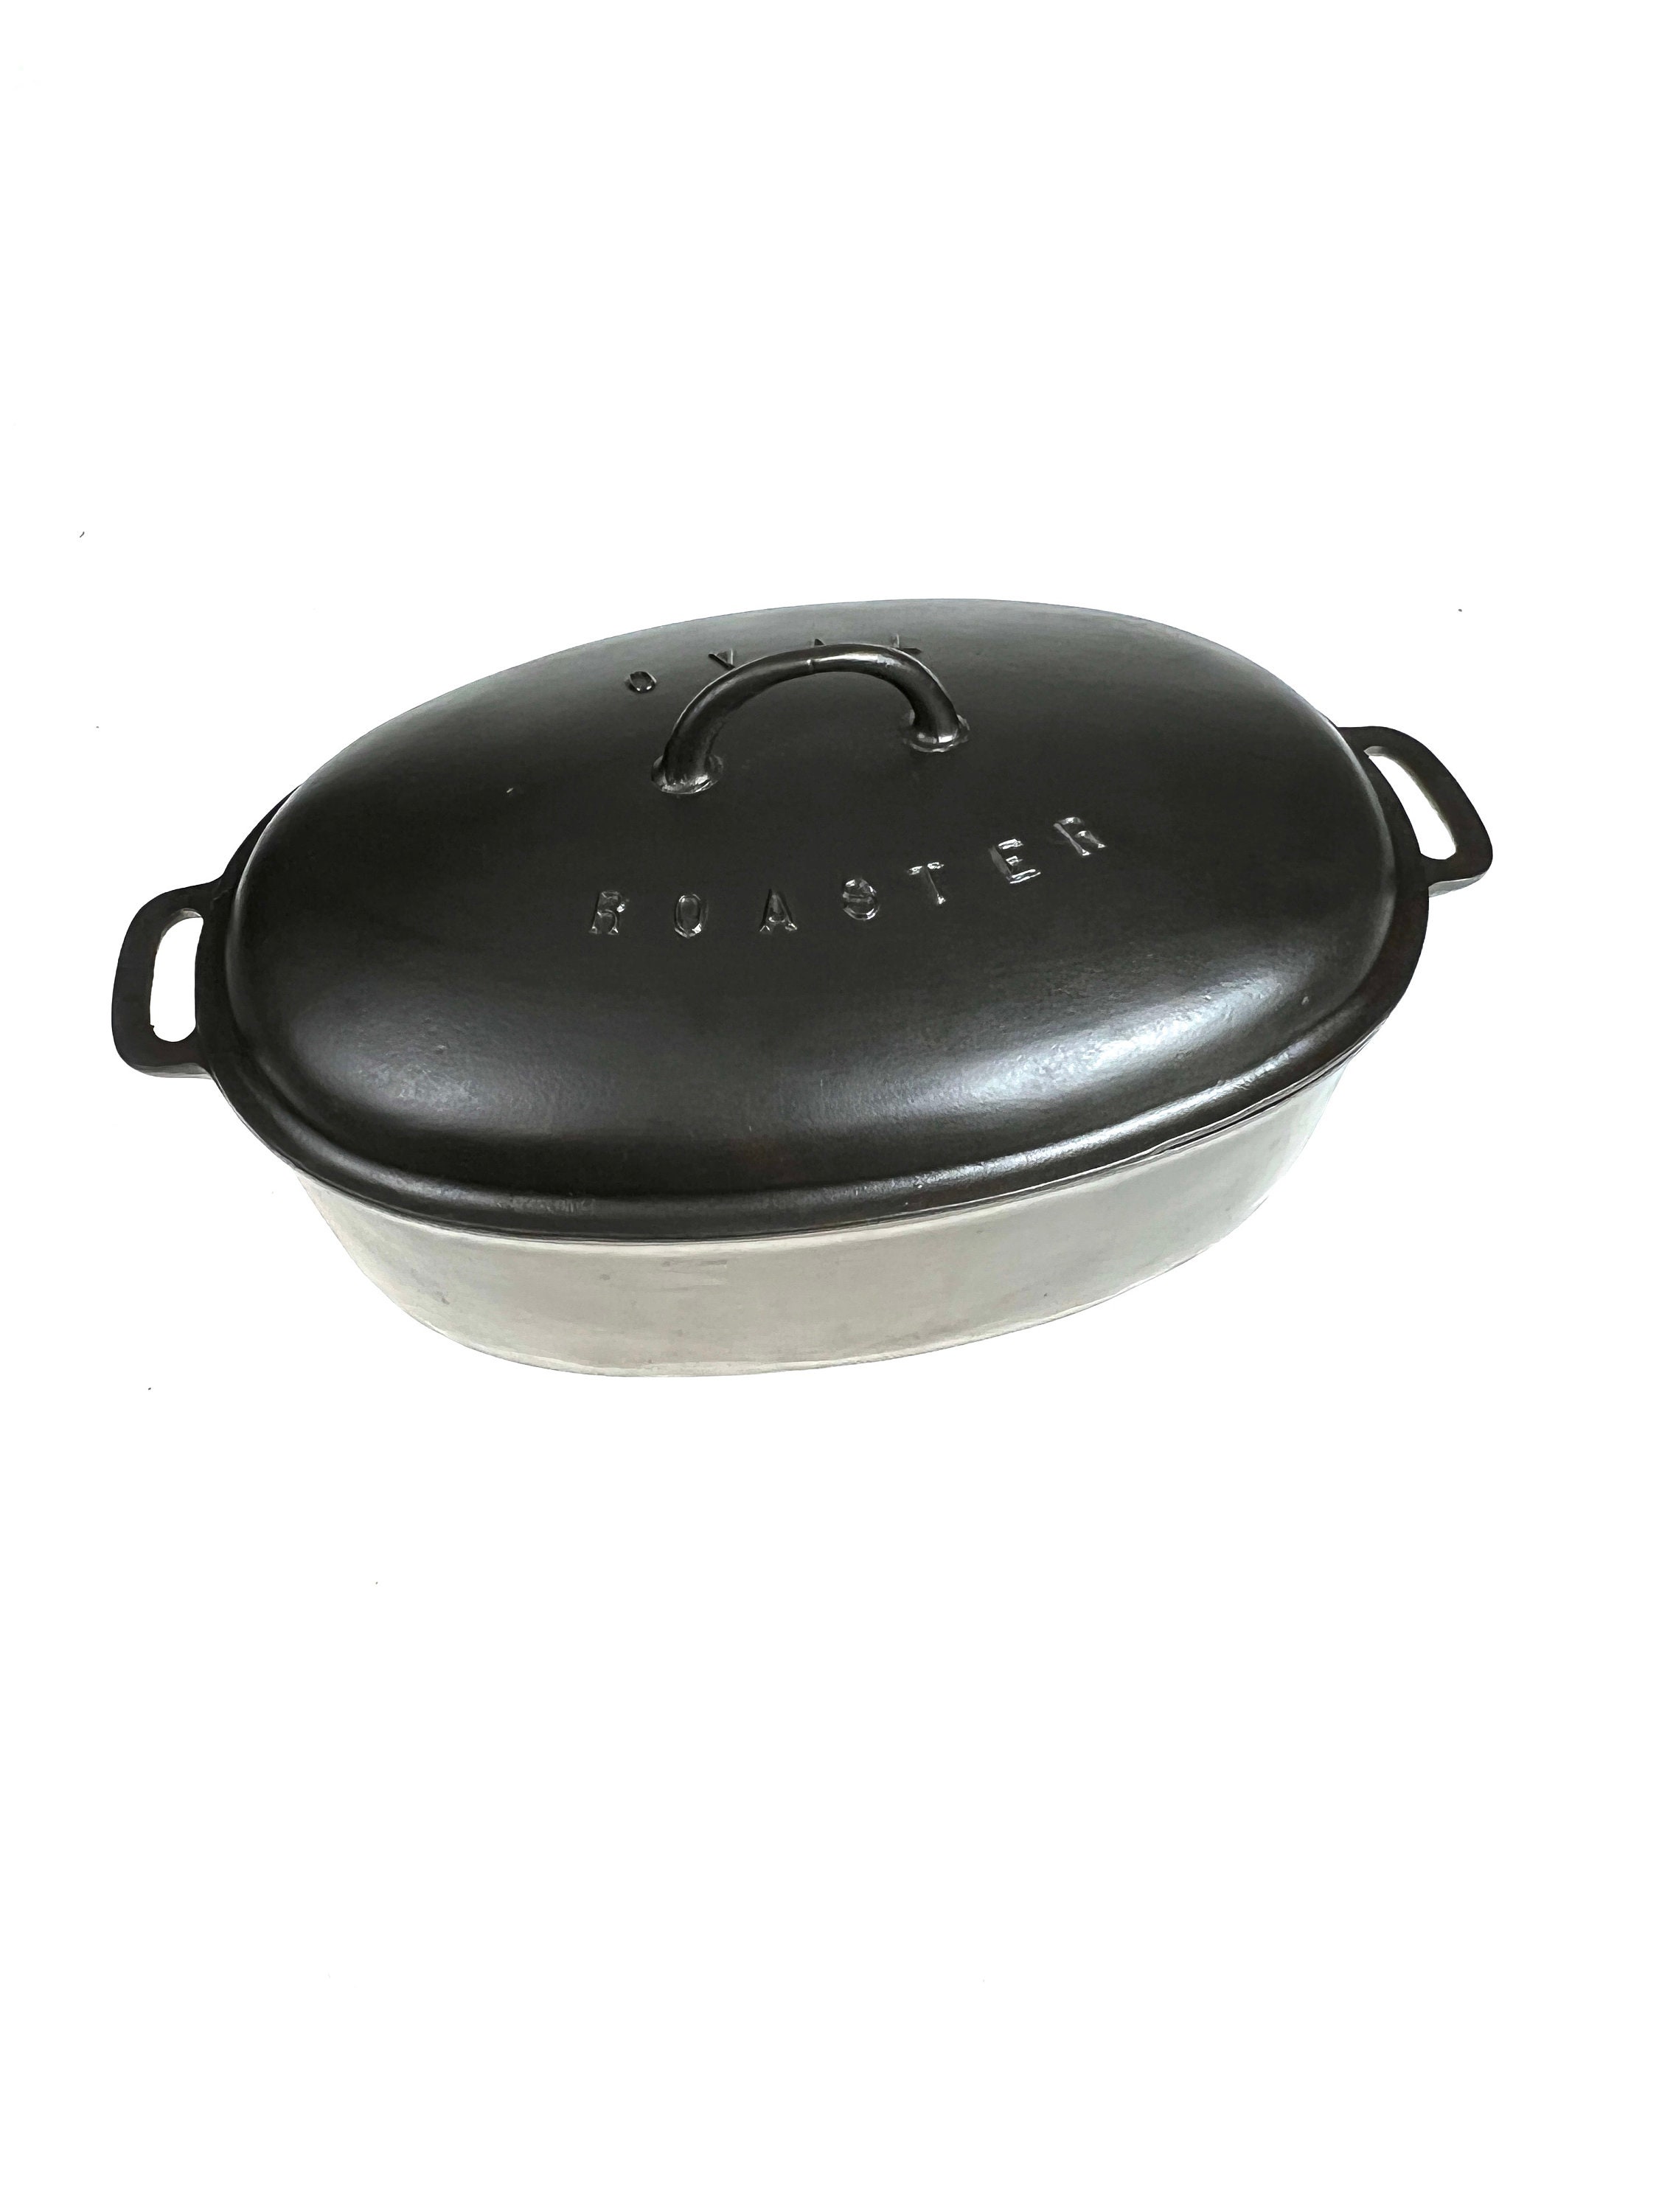 Oval Shape Vintage Iron Enamel Cooking Pot Judge Ware Rare Collectibles  BT-89